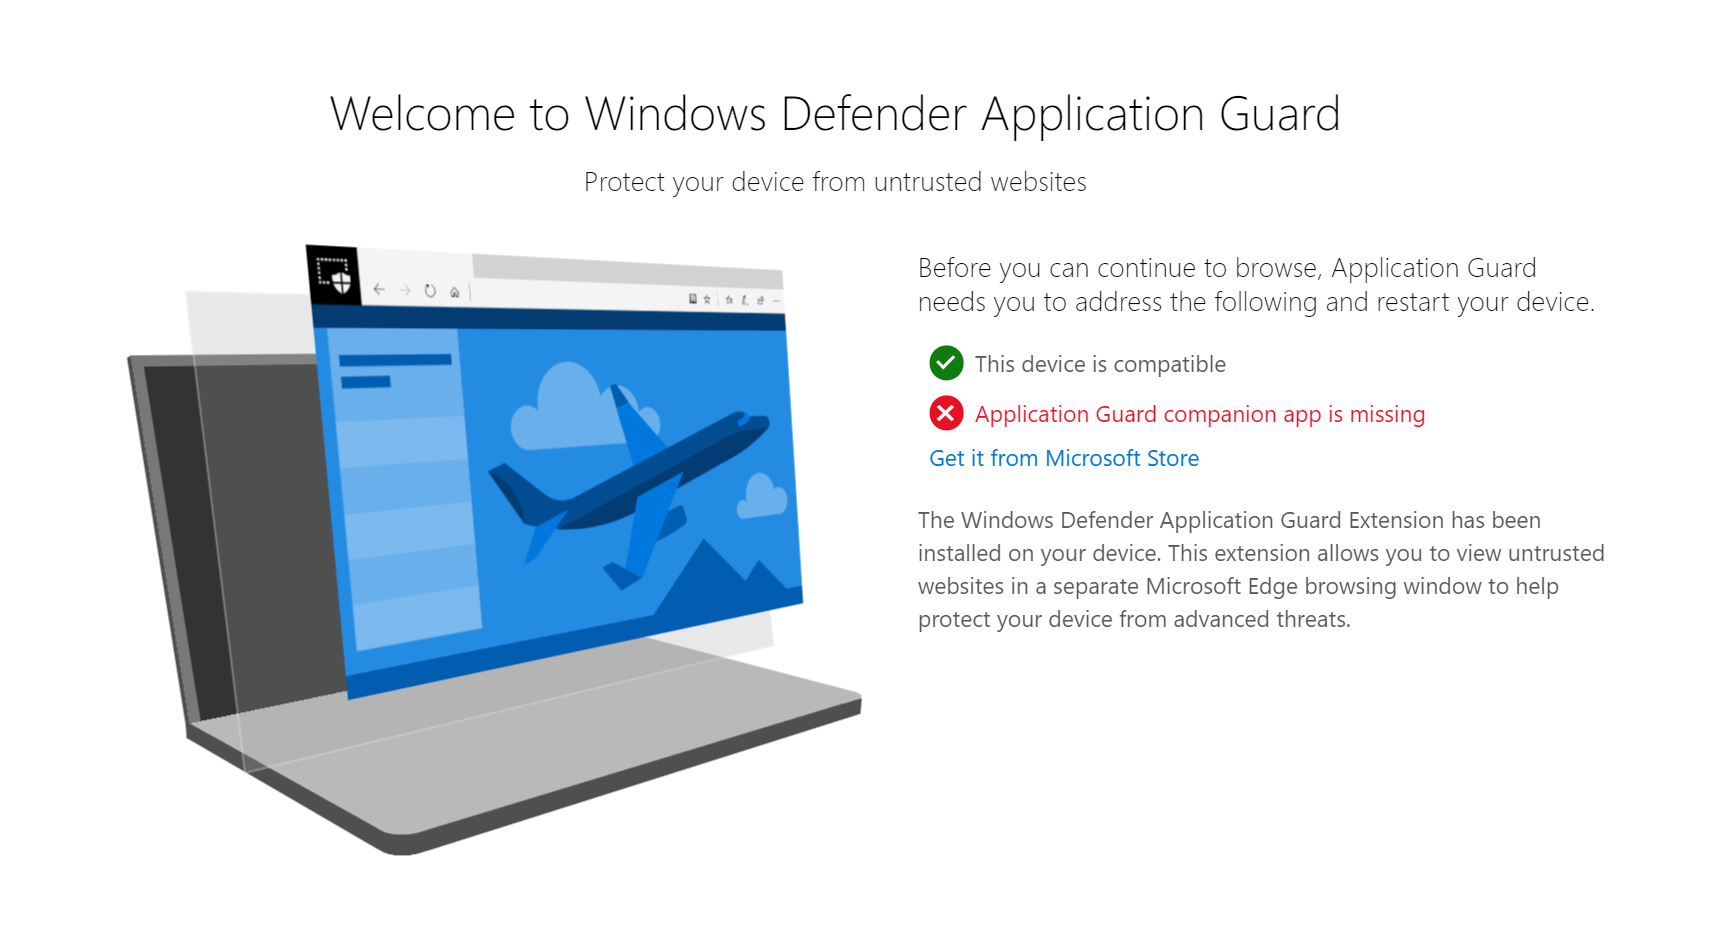 Windows Defender Application Guard settings windows-defender-application-guard-components-not-complete.png